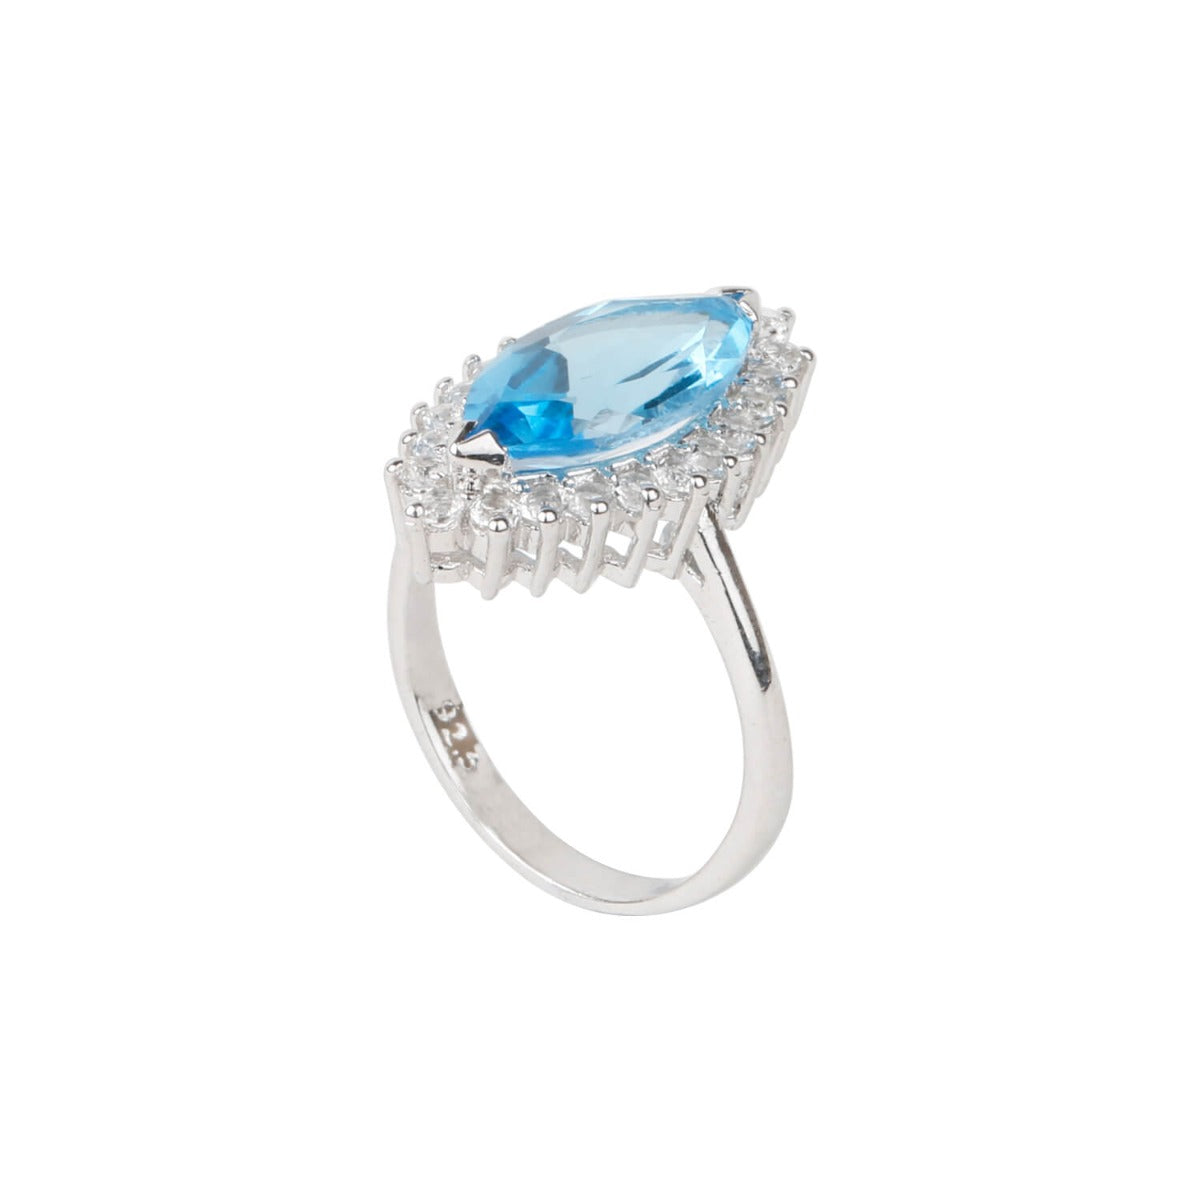 Blue topaz marquise-cut ring